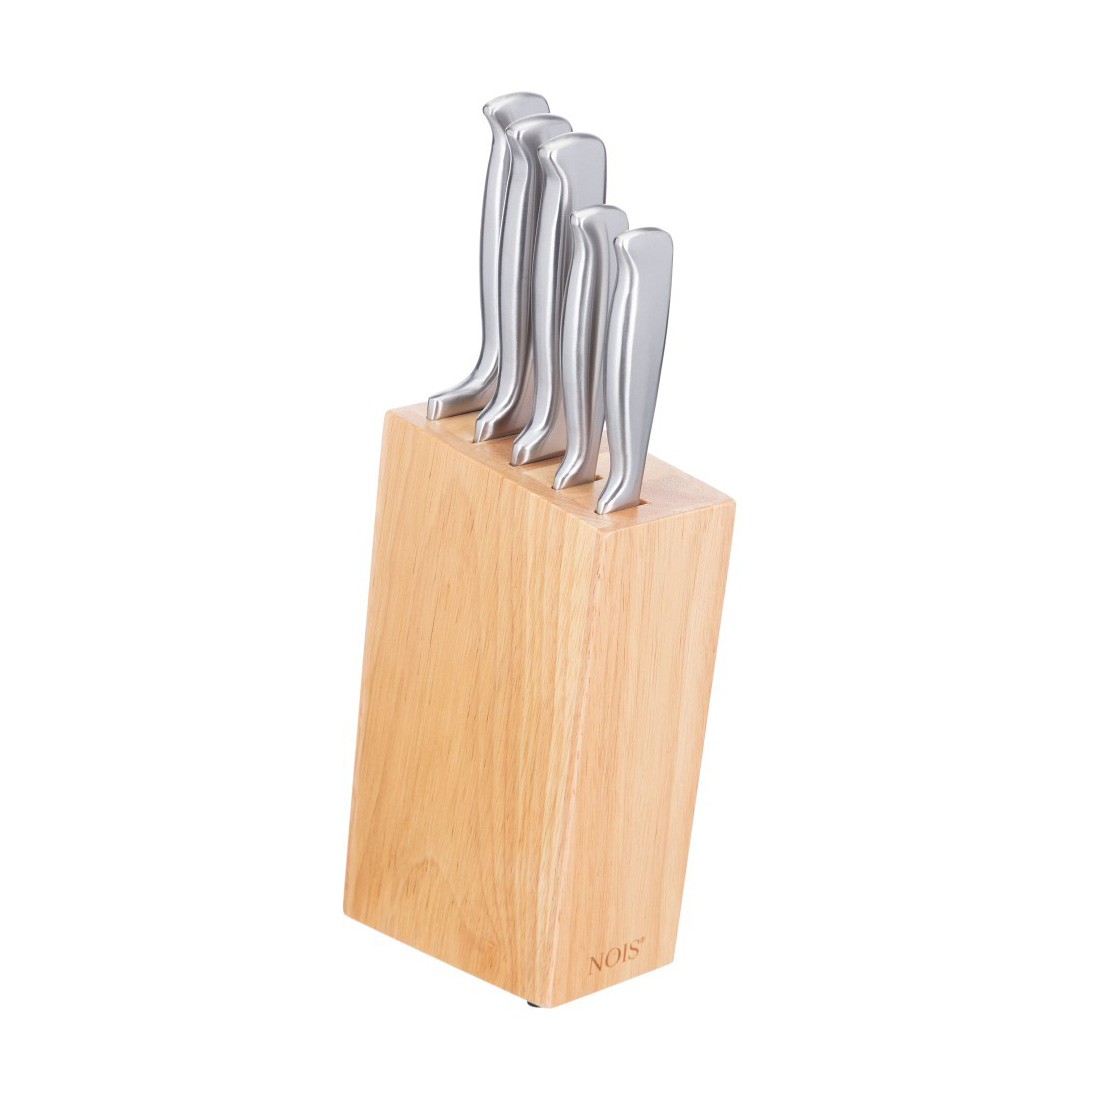 vida knifeblock nois frederik aerts product design